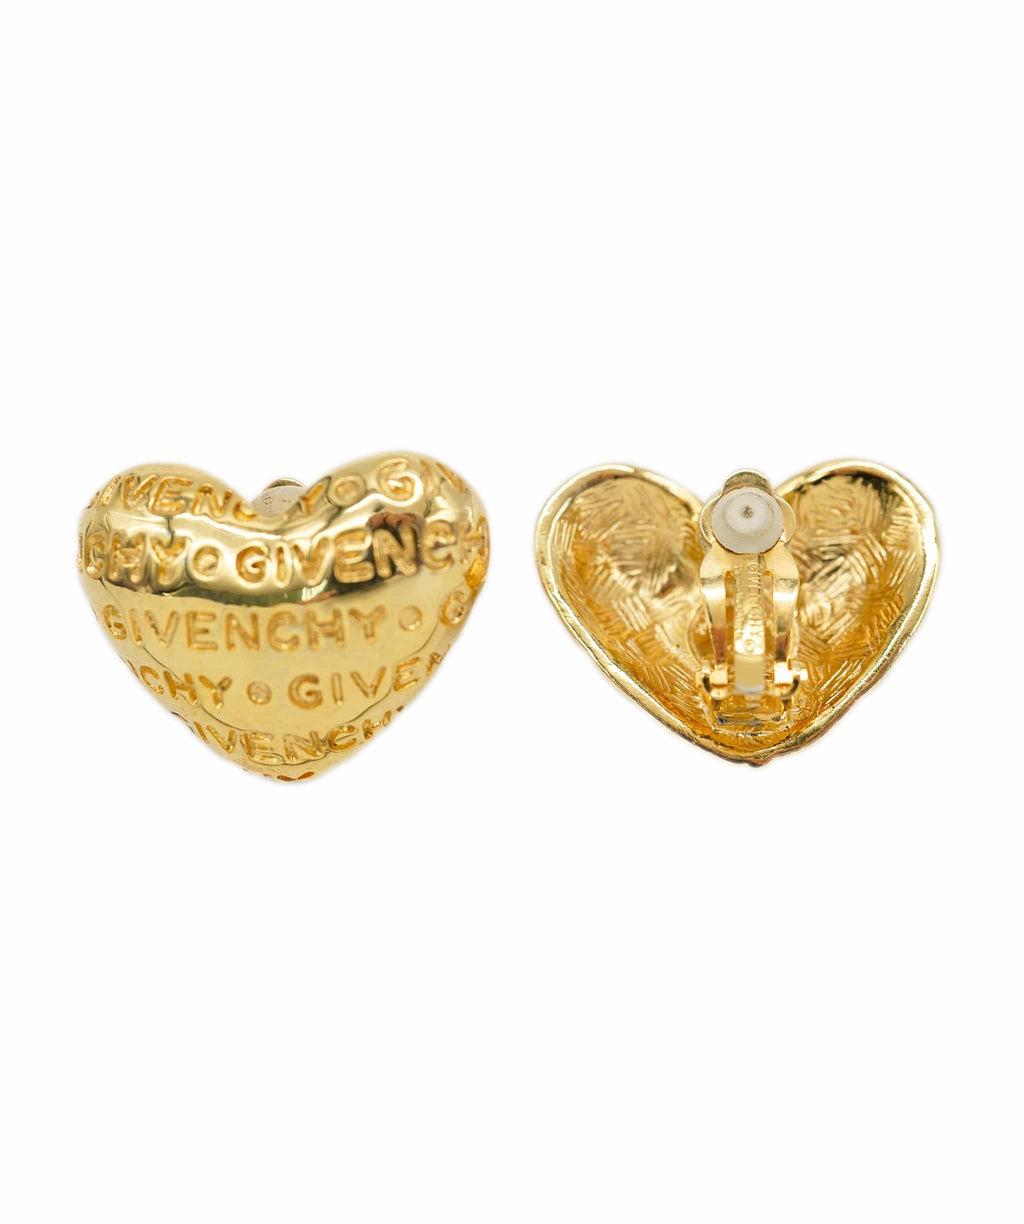 Givenchy | Jewelry | Givenchy Heart Charm Earrings | Poshmark